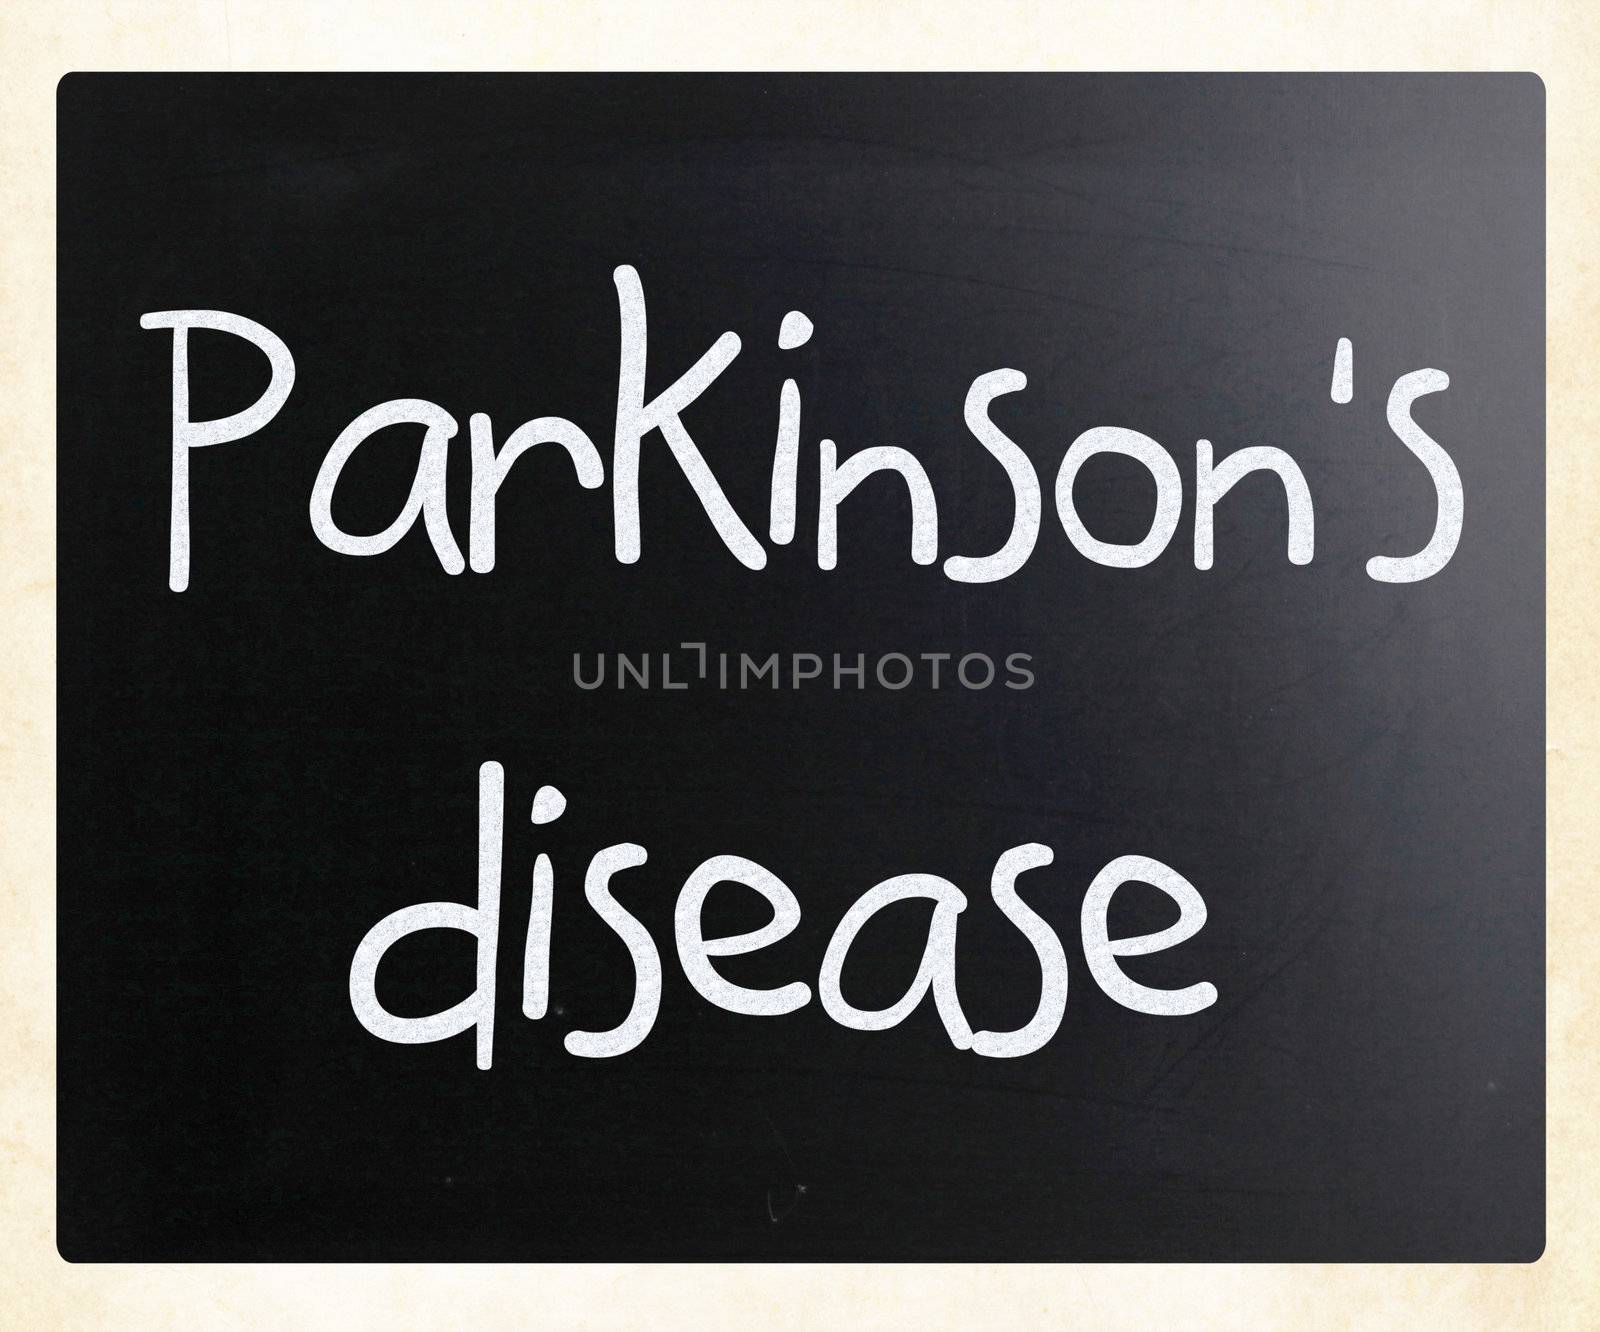 Parkinson's disease by nenov